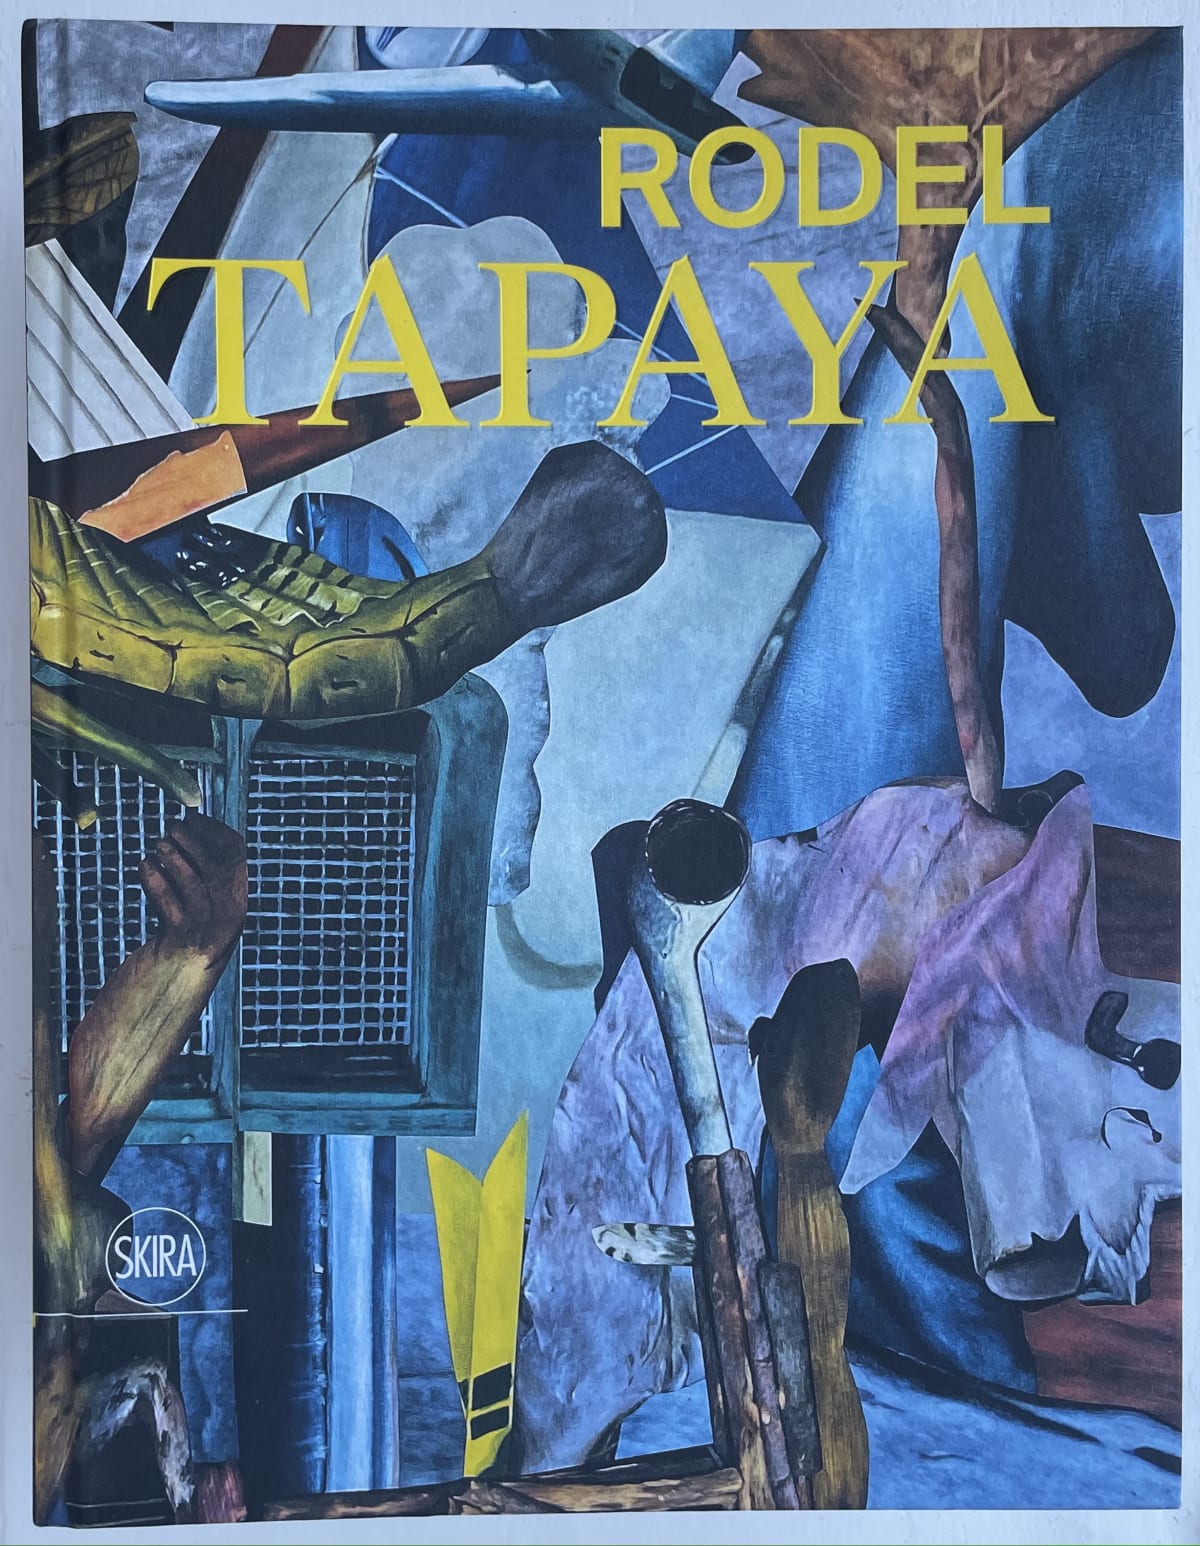 Rodel Tapaya